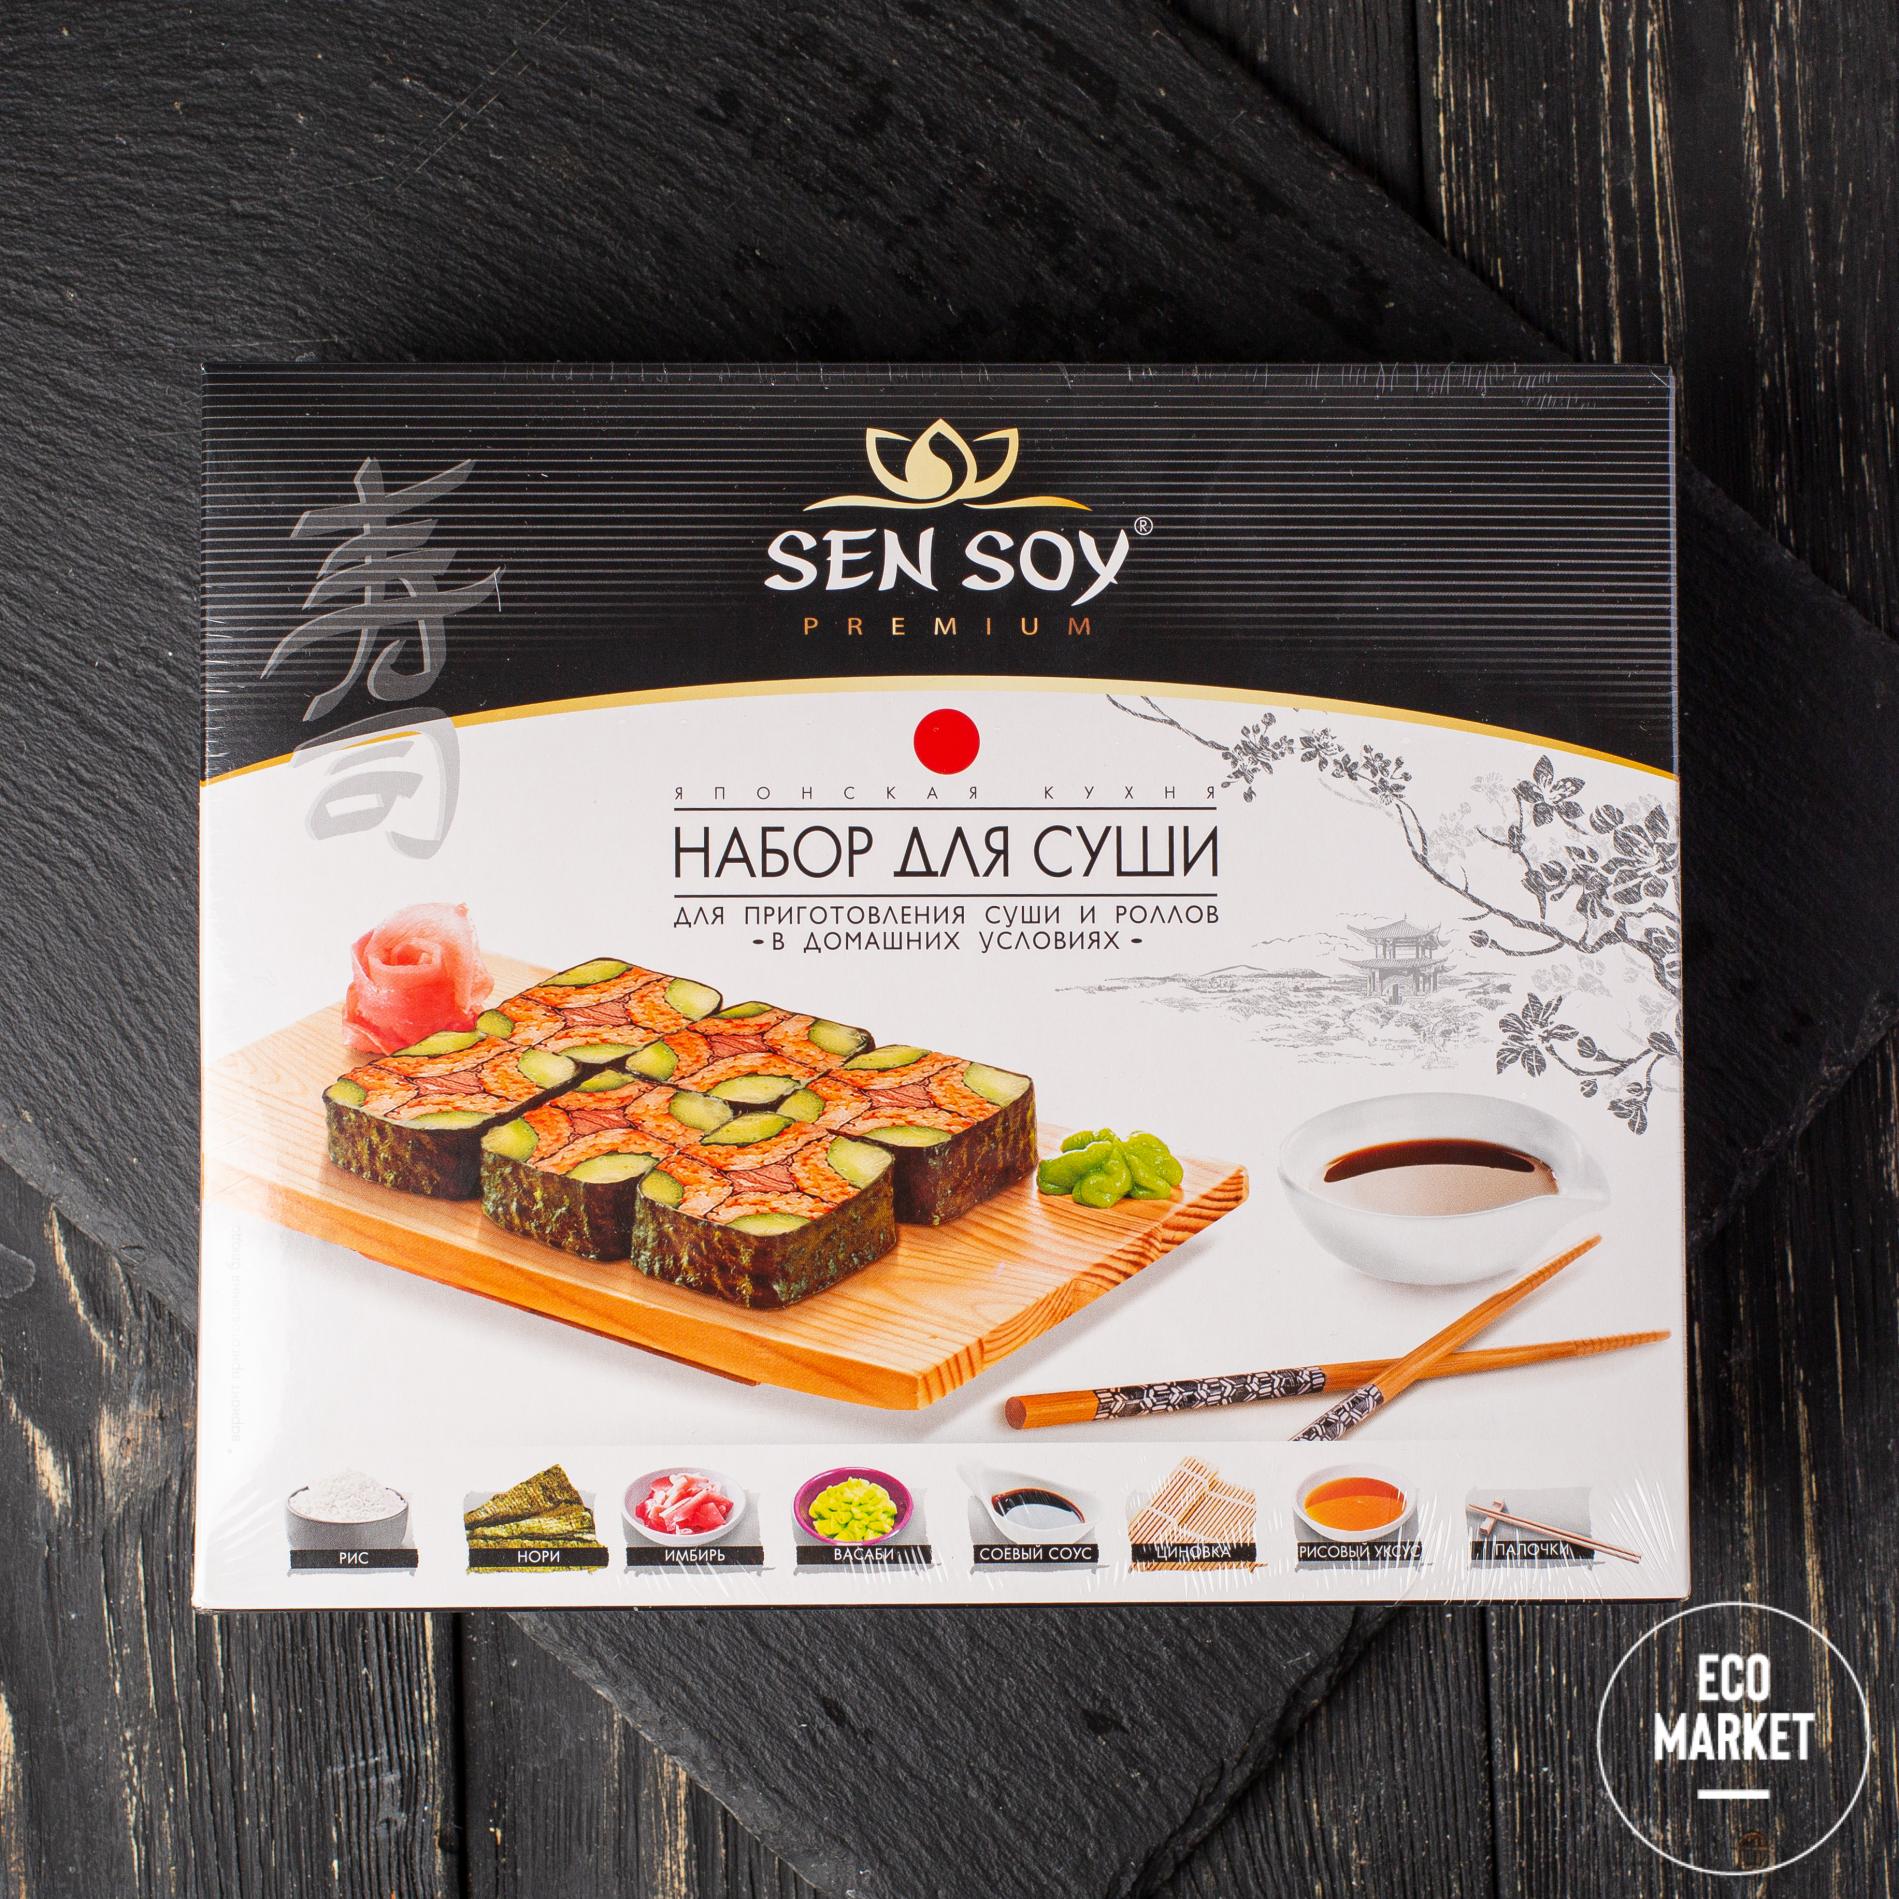 Sen soy набор для суши цена фото 12